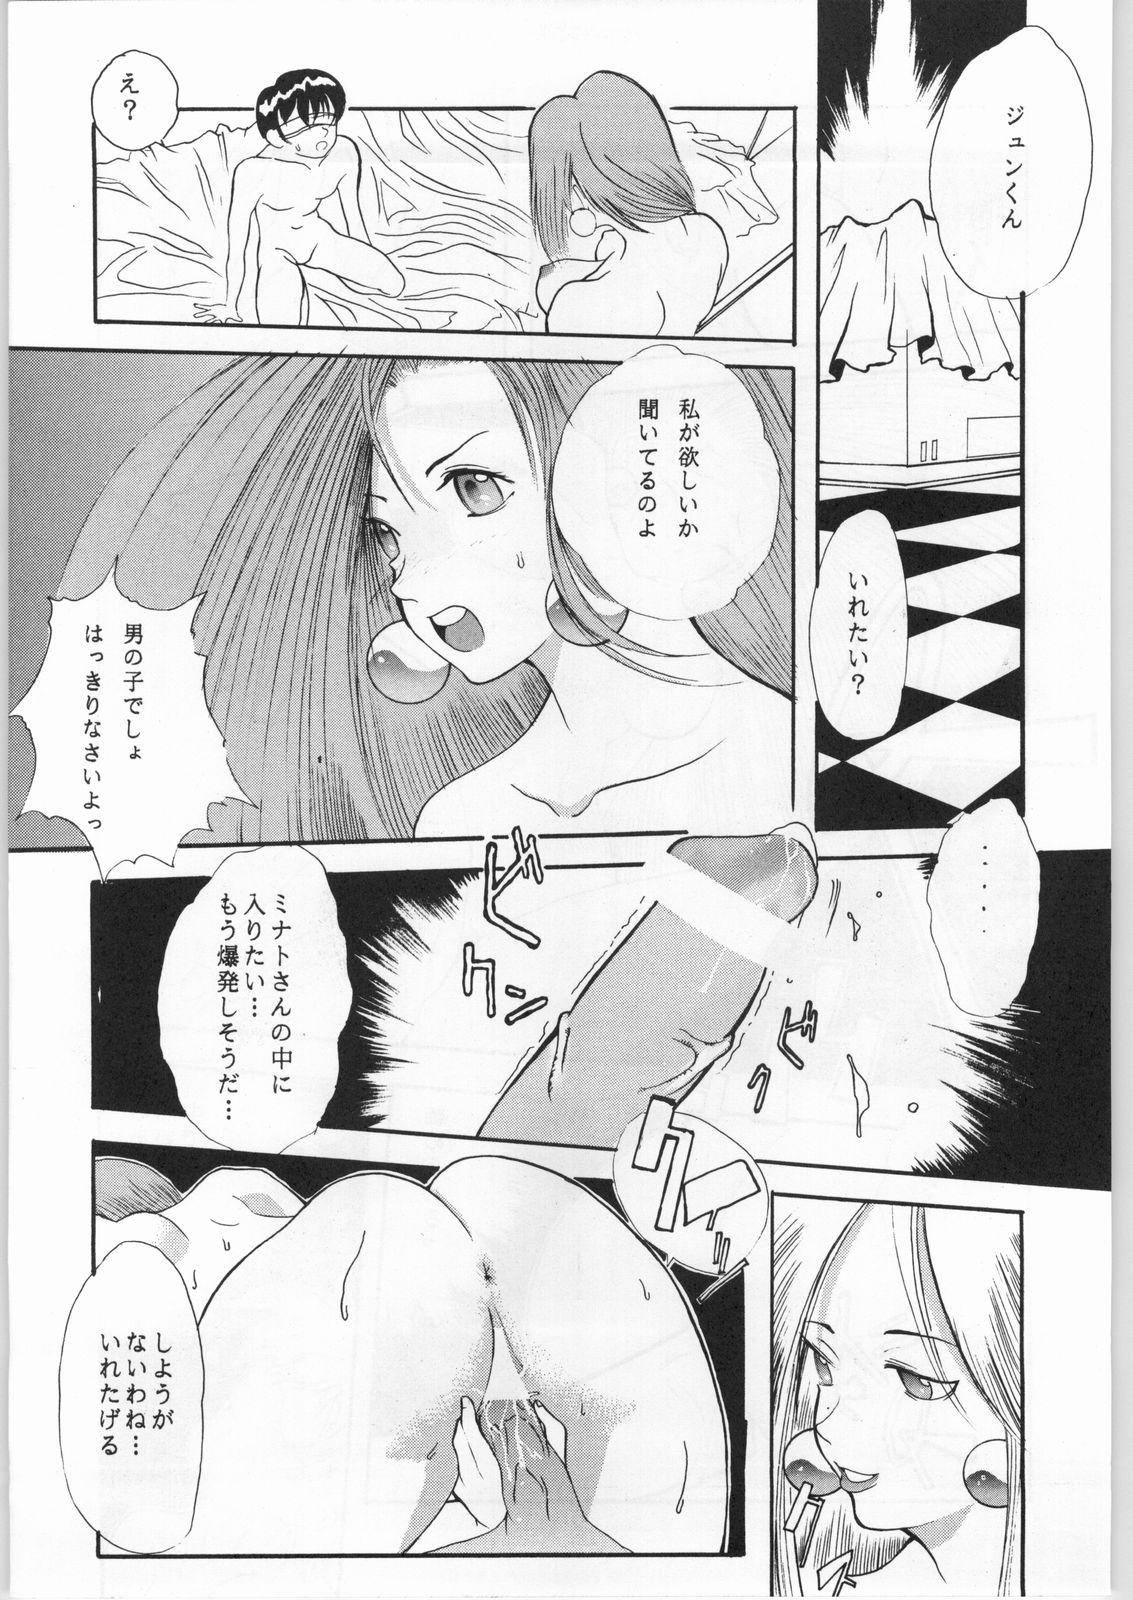 Anime Bros Coteri Magazine 2 - Nadefune 23